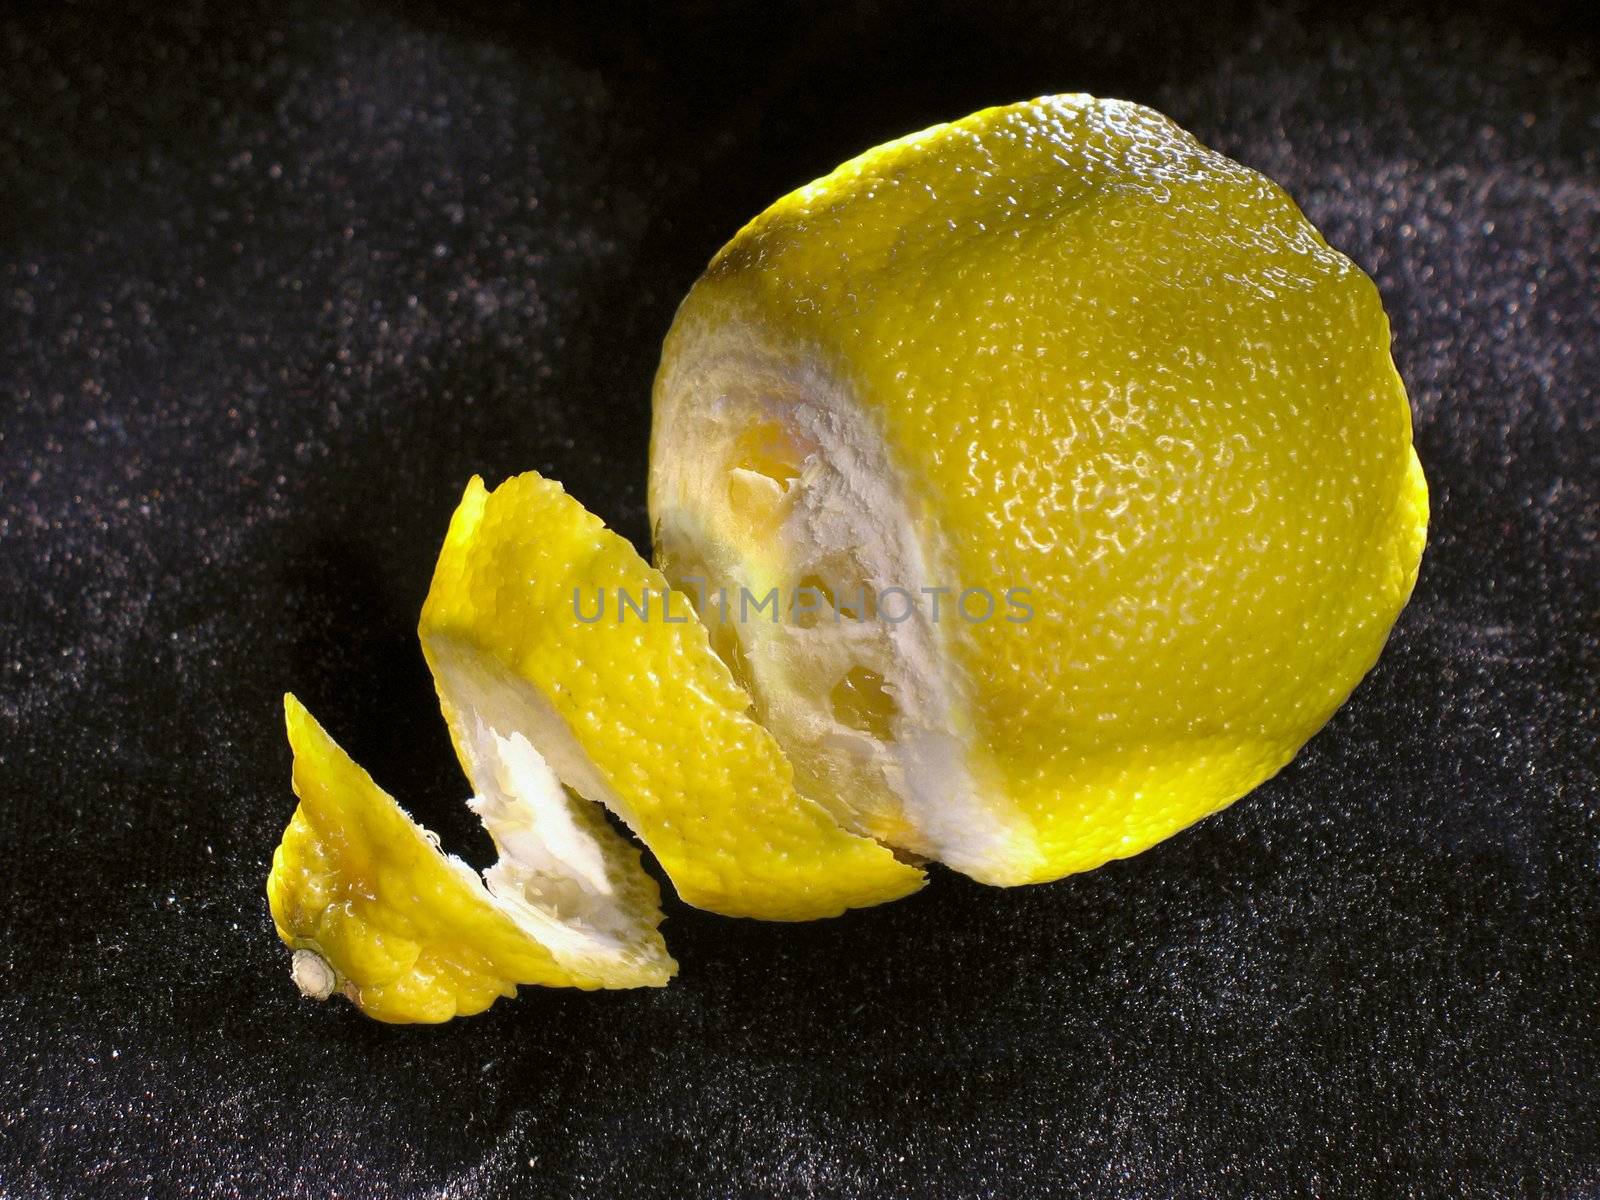 Lemon with purified spiral by rind by Kriblikrabli